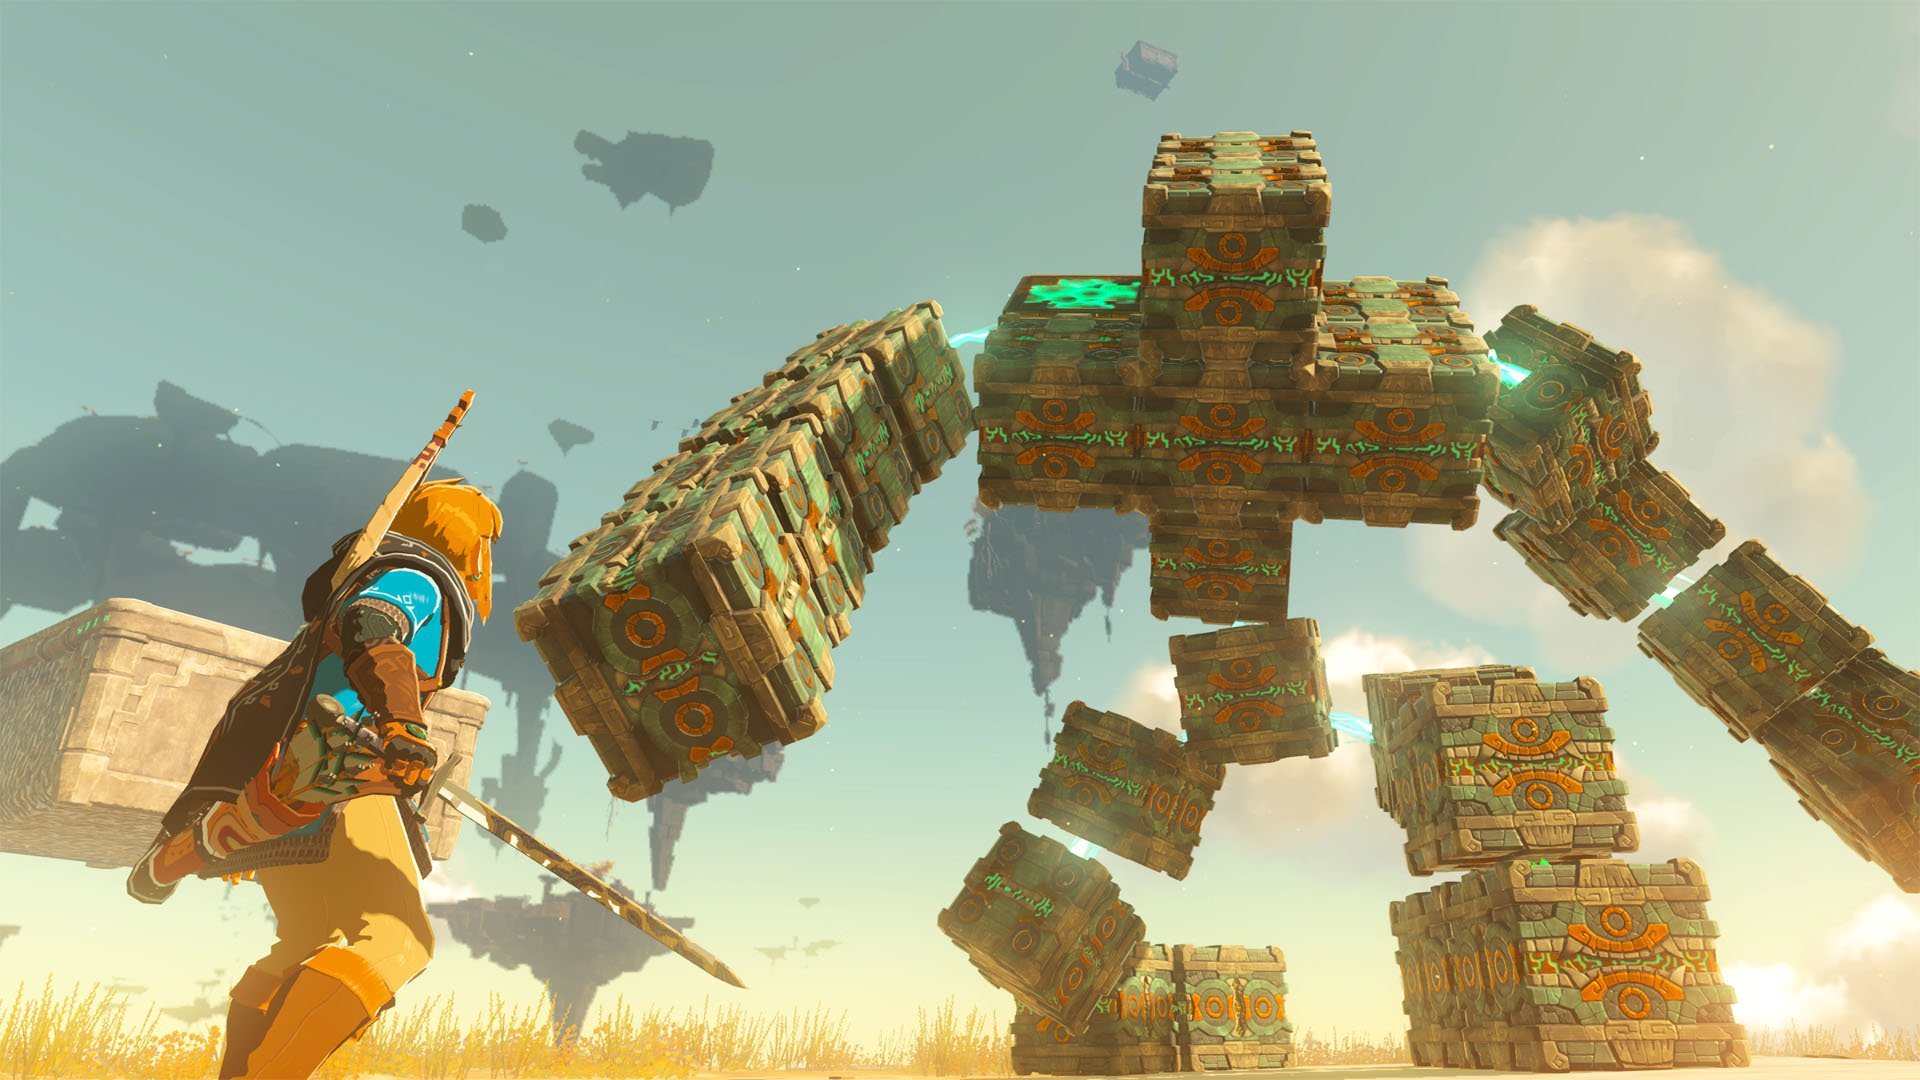 Zelda: Breath of the wild has created this insane Metacritic Record